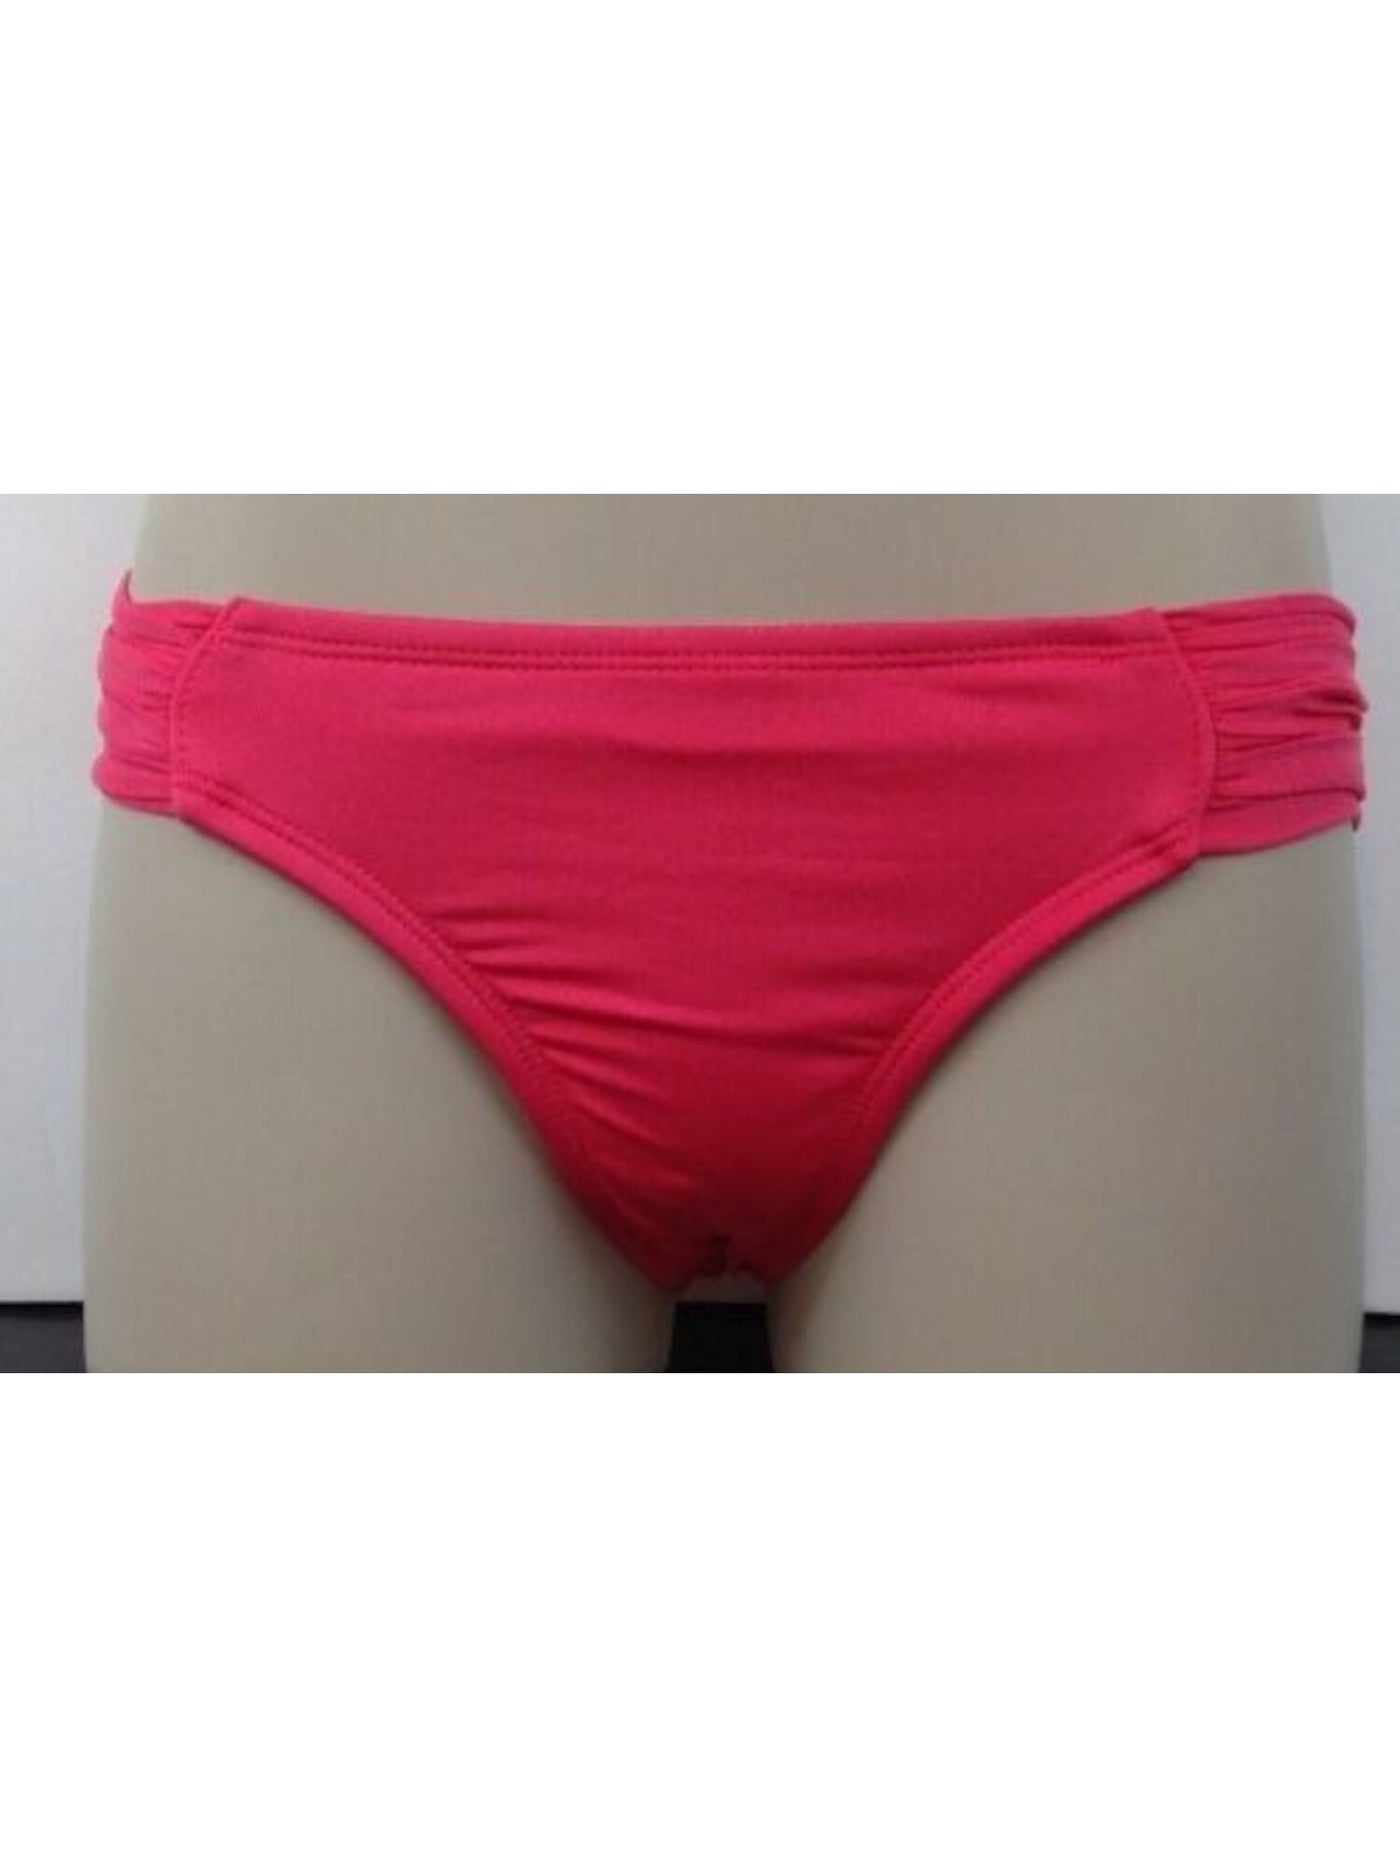 MOSSIMO SUPPLY CO. Women's Pink Bikini Bottom XL